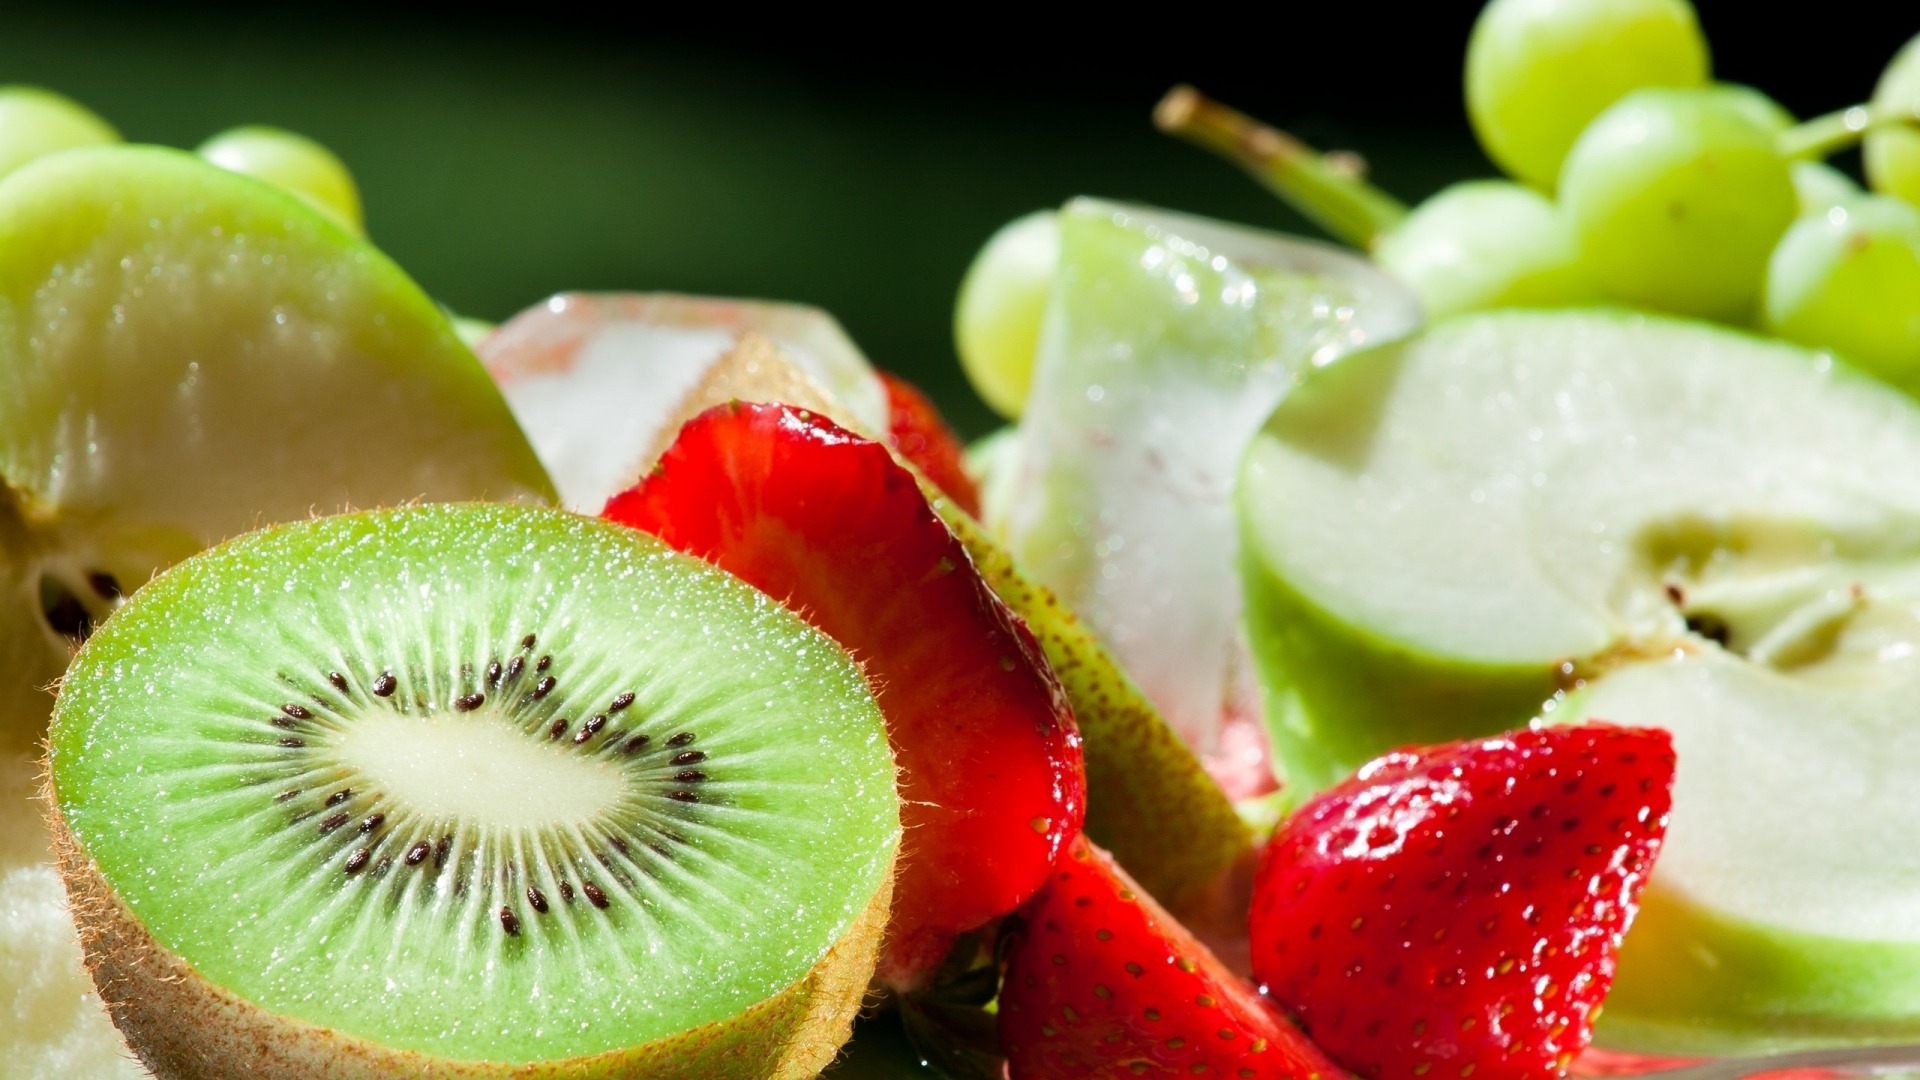 Apples Strawberries And Kiwis - HD Wallpaper 